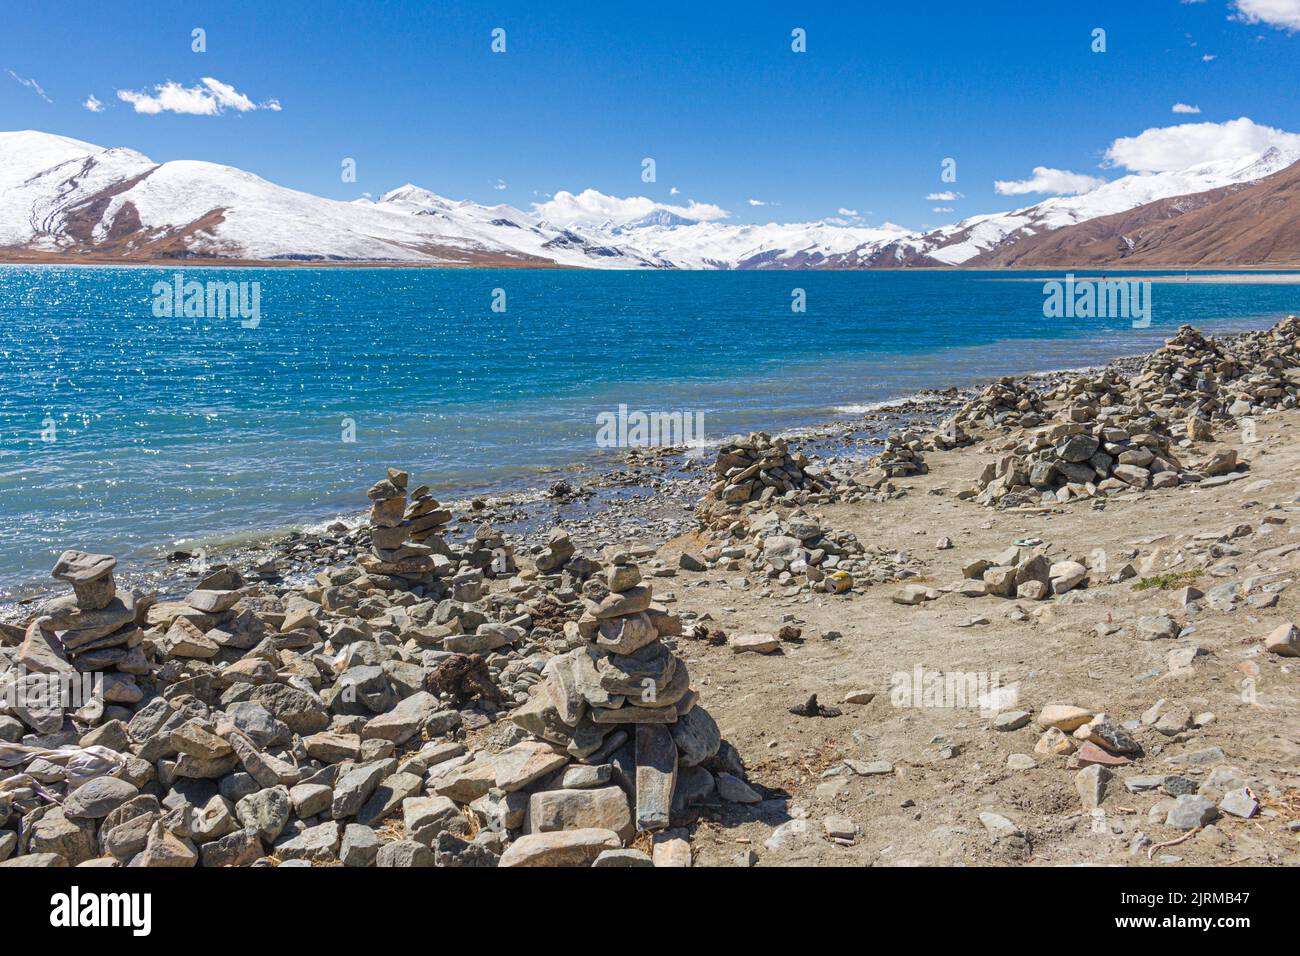 Yangzhuo Yongcuo lake also known as slender west lake is close to Lhasa, Tibet, China - image taken on the Tibetan Friendship Highway. Stock Photo